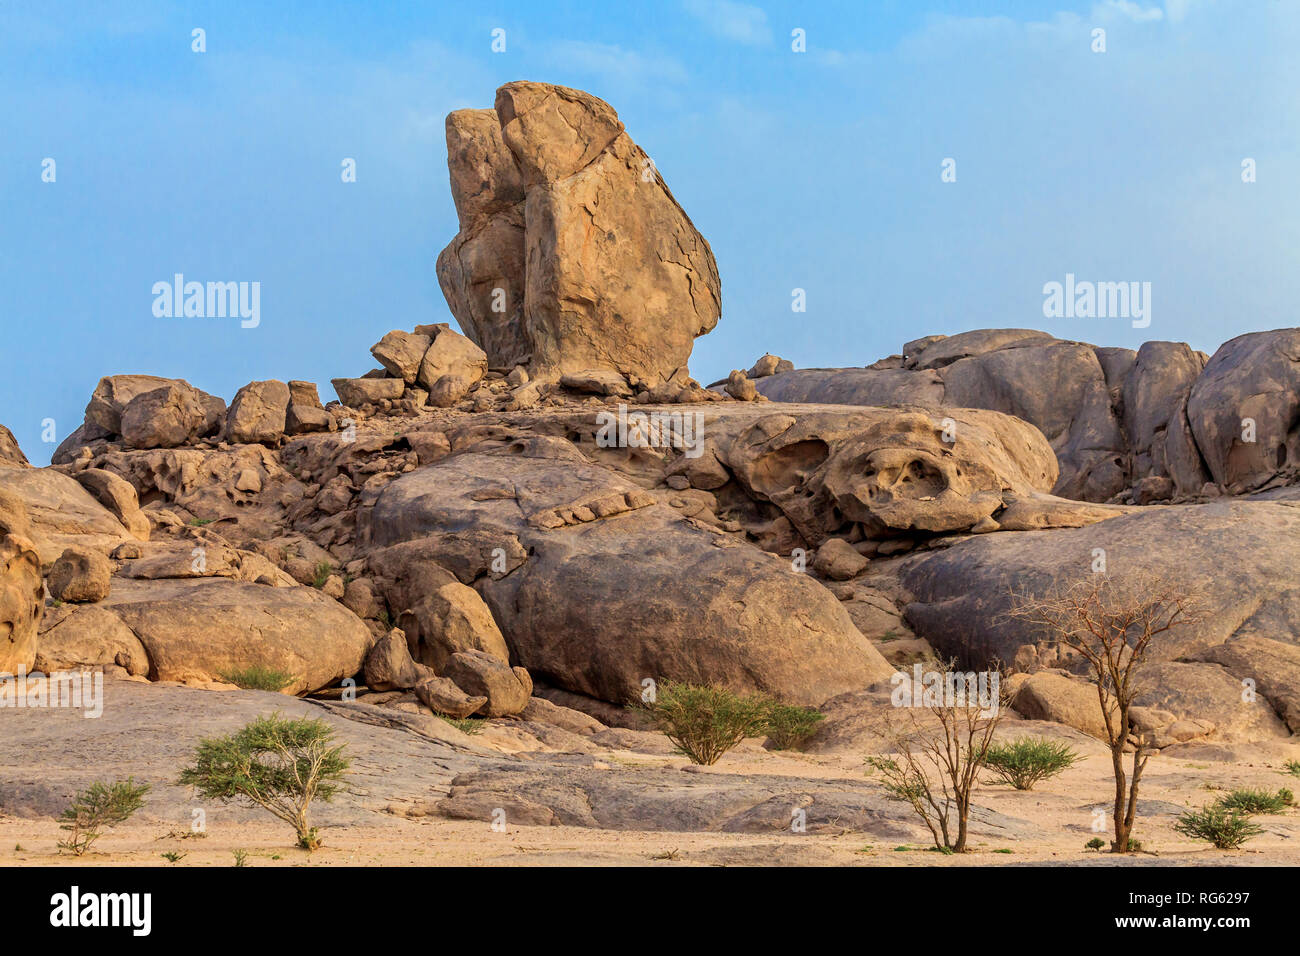 Rock formation in the desert, Saudi Arabia Stock Photo